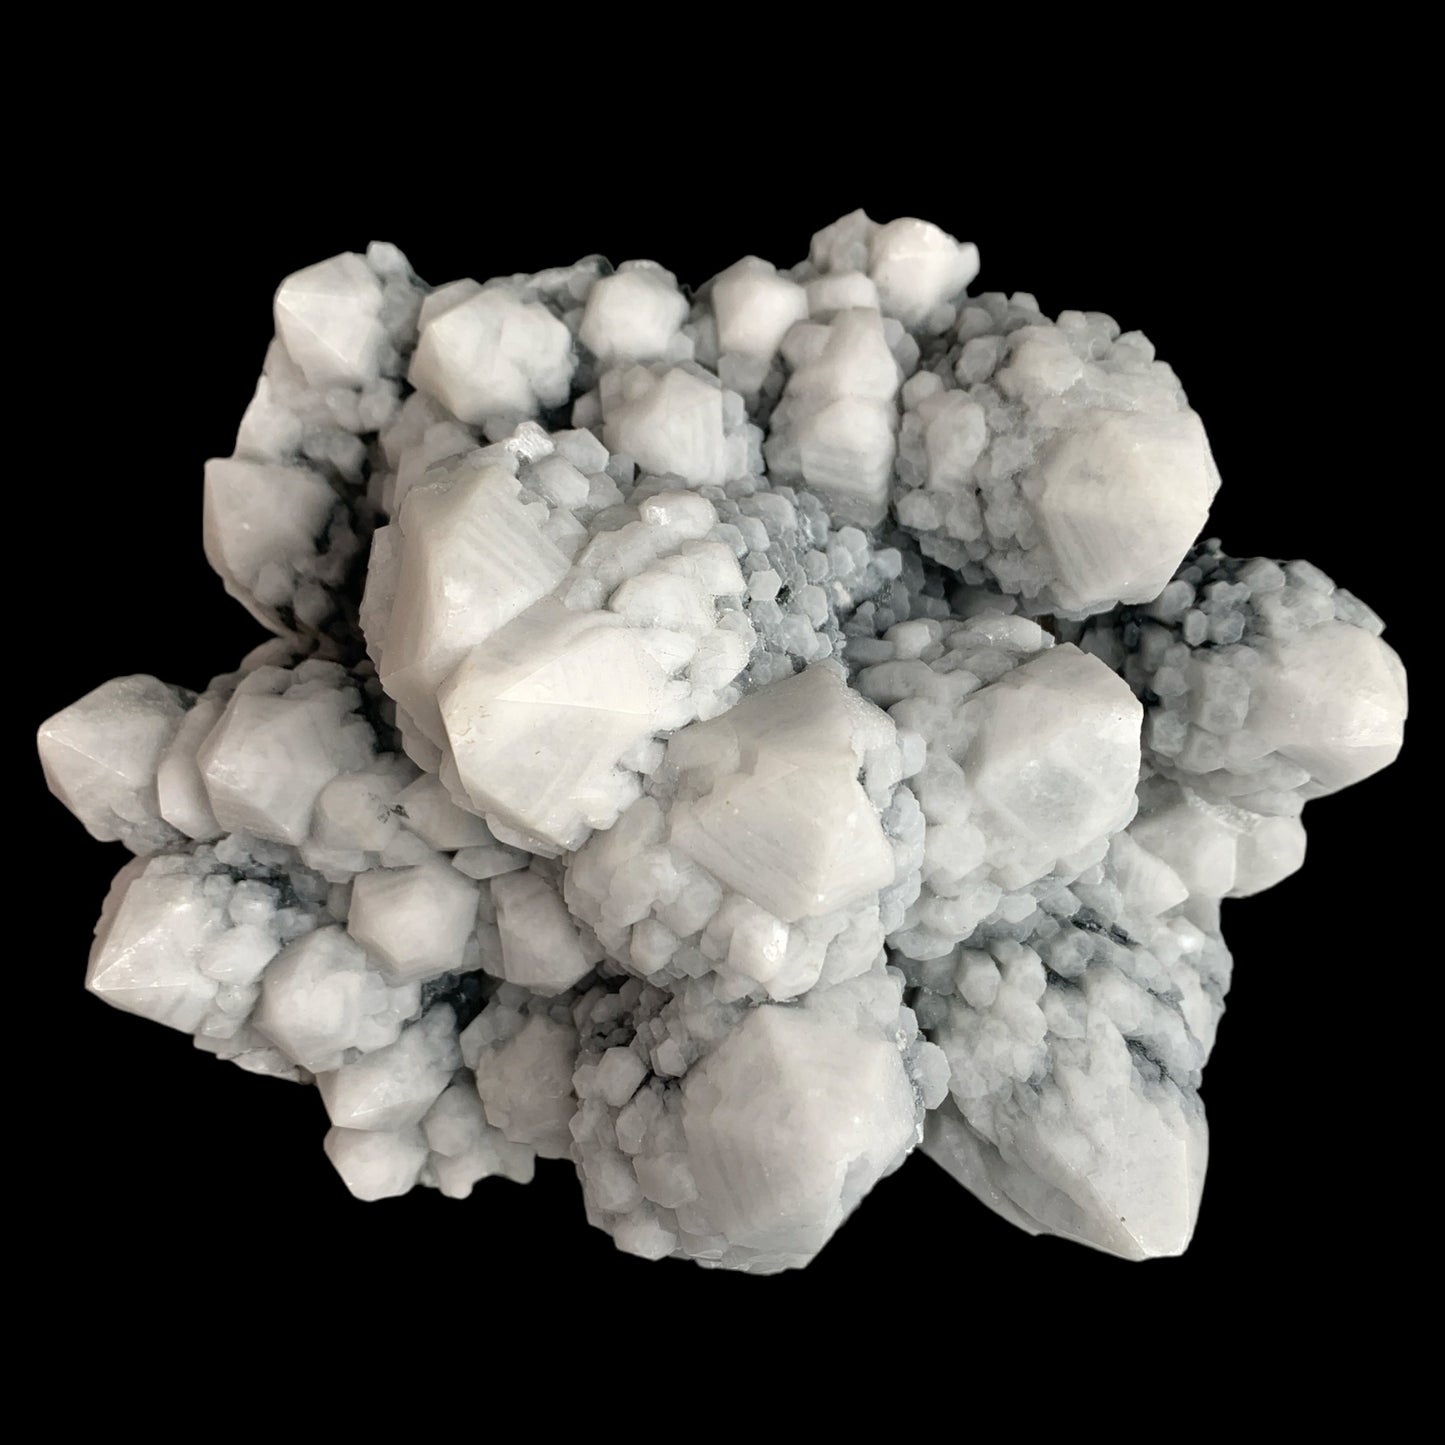 #1 Snow Mountain Crystal Cluster - 2670g - 17cm - Specimen 1